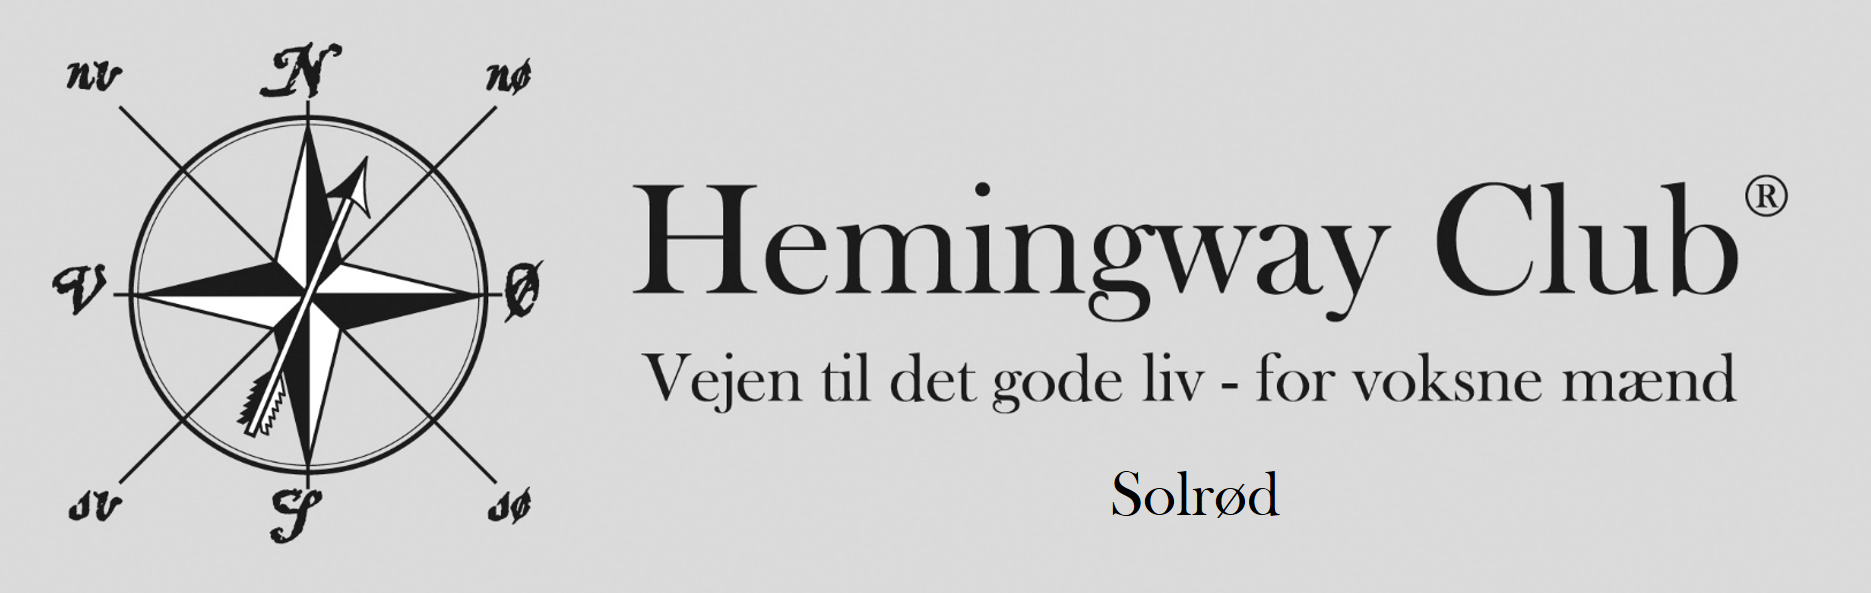 Hemingway Club 1 Solrød